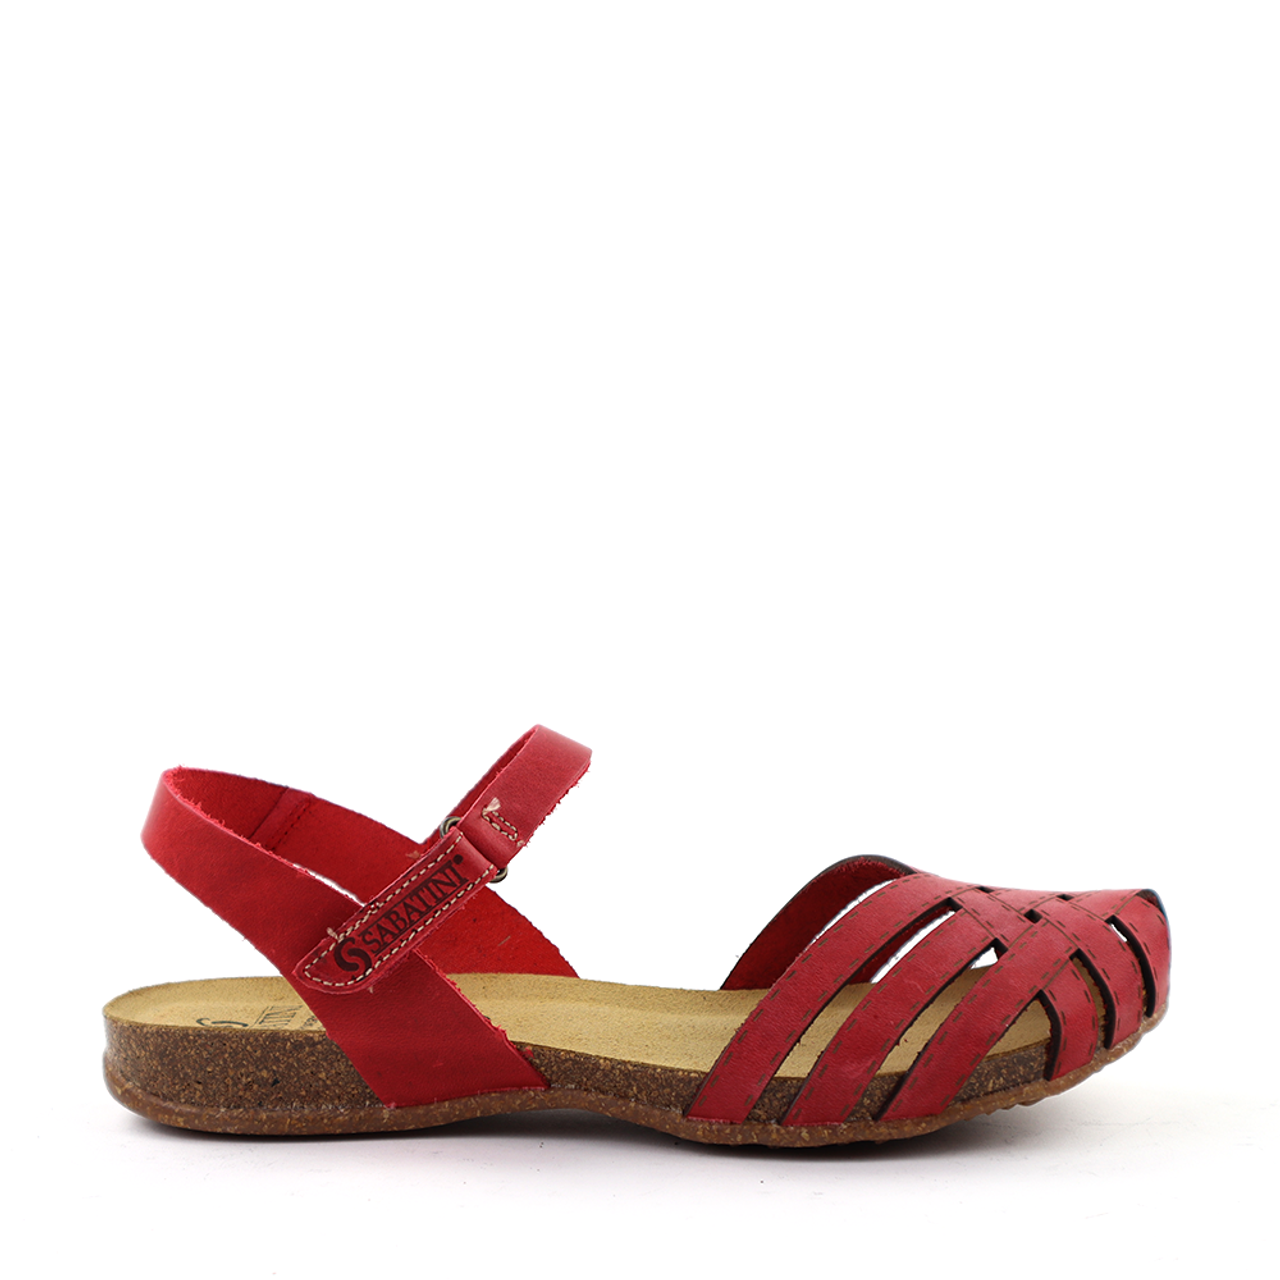 Sabatini 4606 rosso sandal | Hanigs Footwear